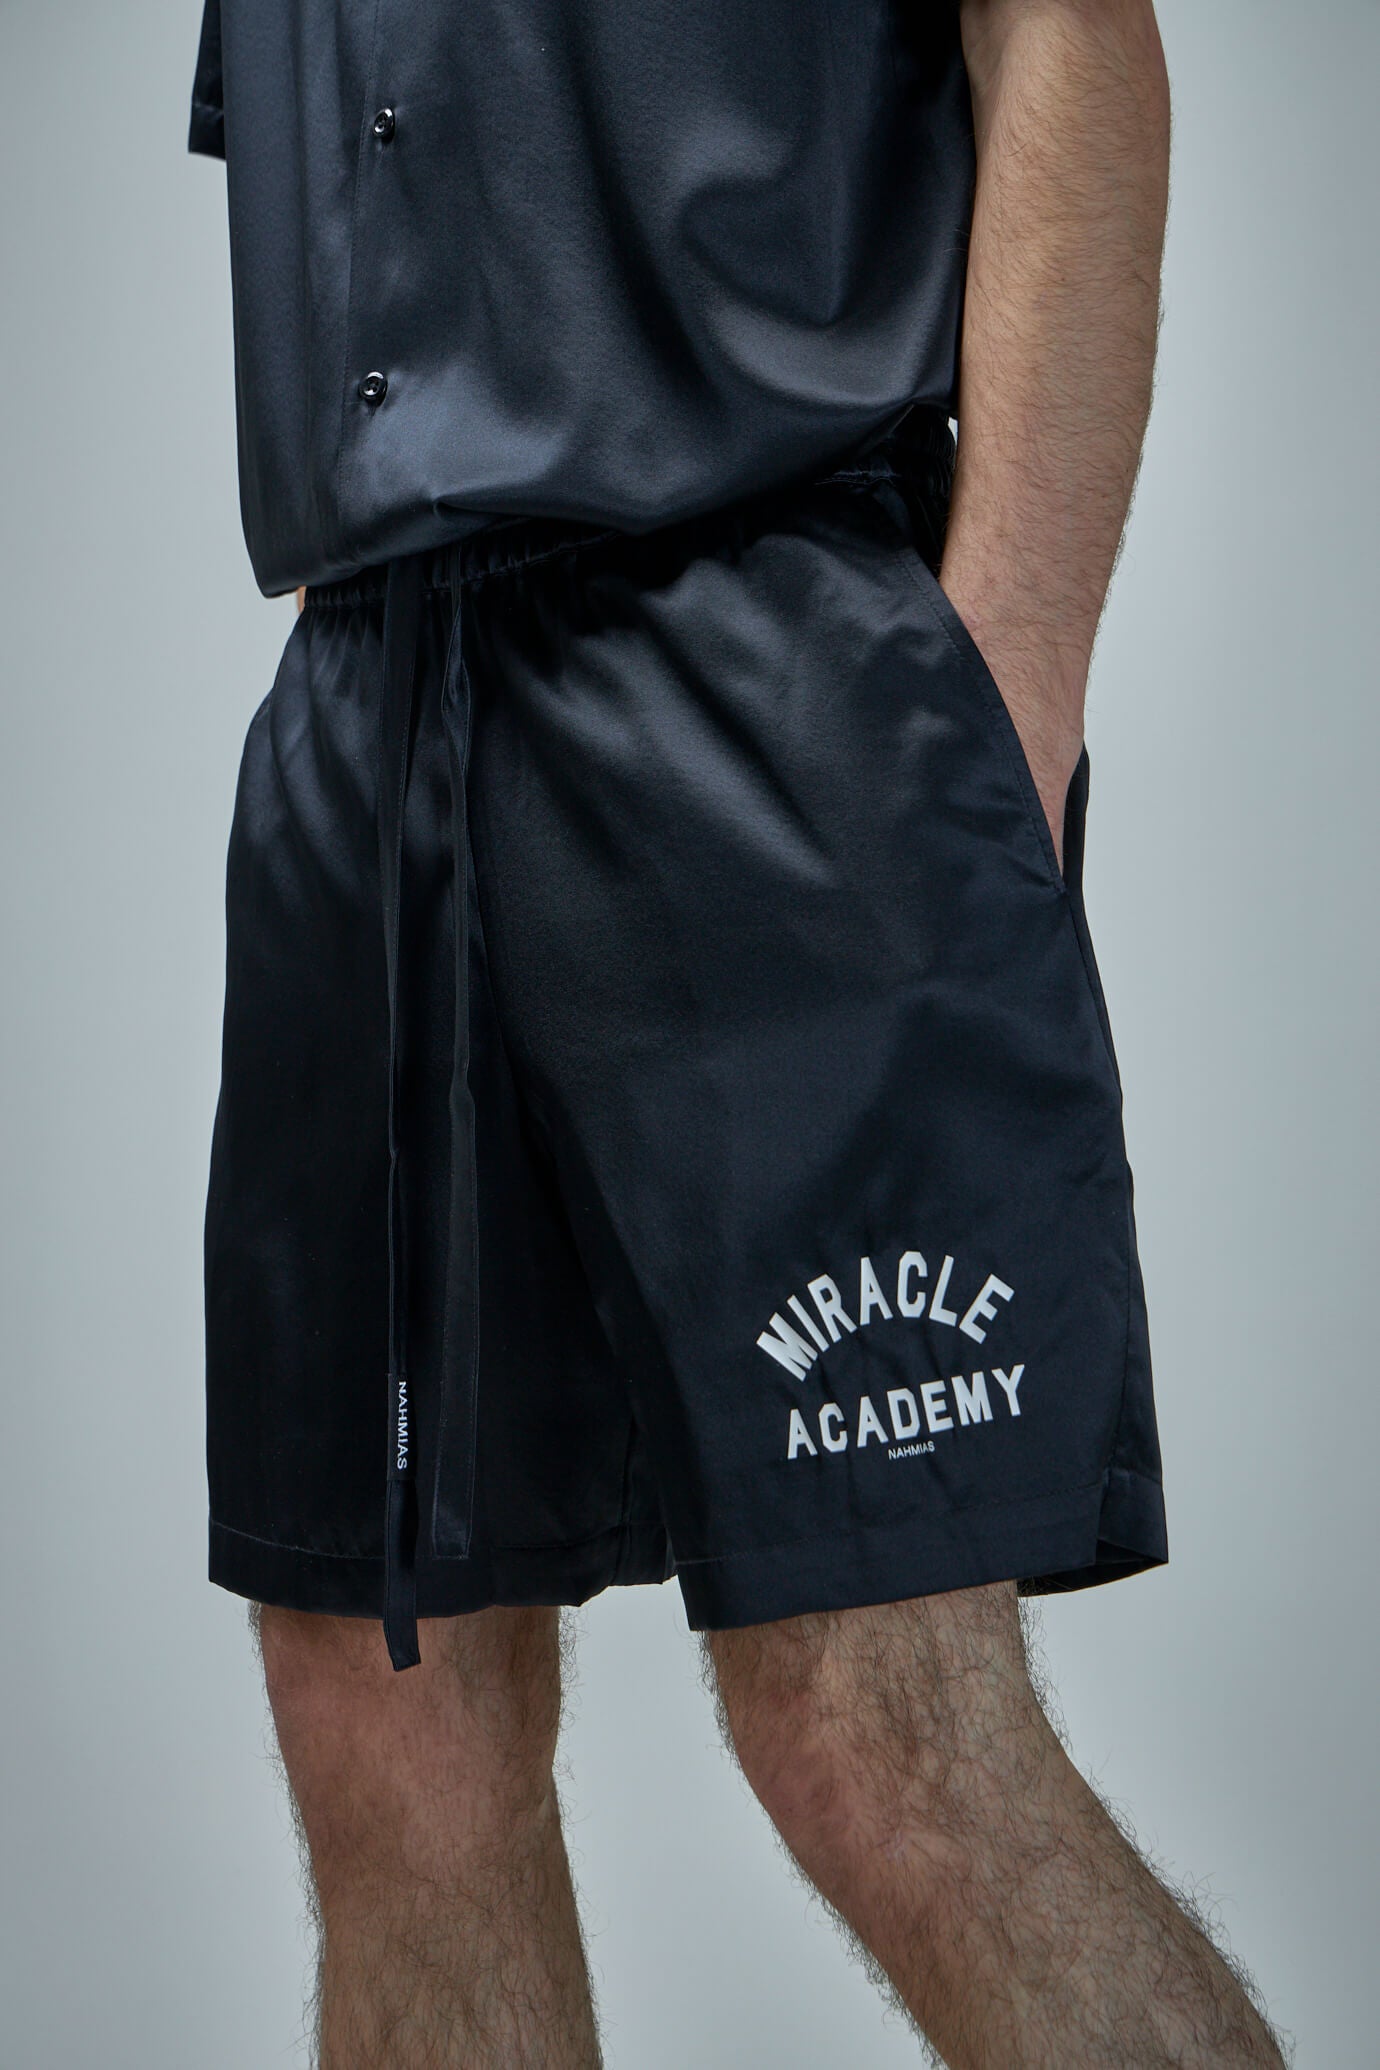 Miracle Academy Silk Shorts